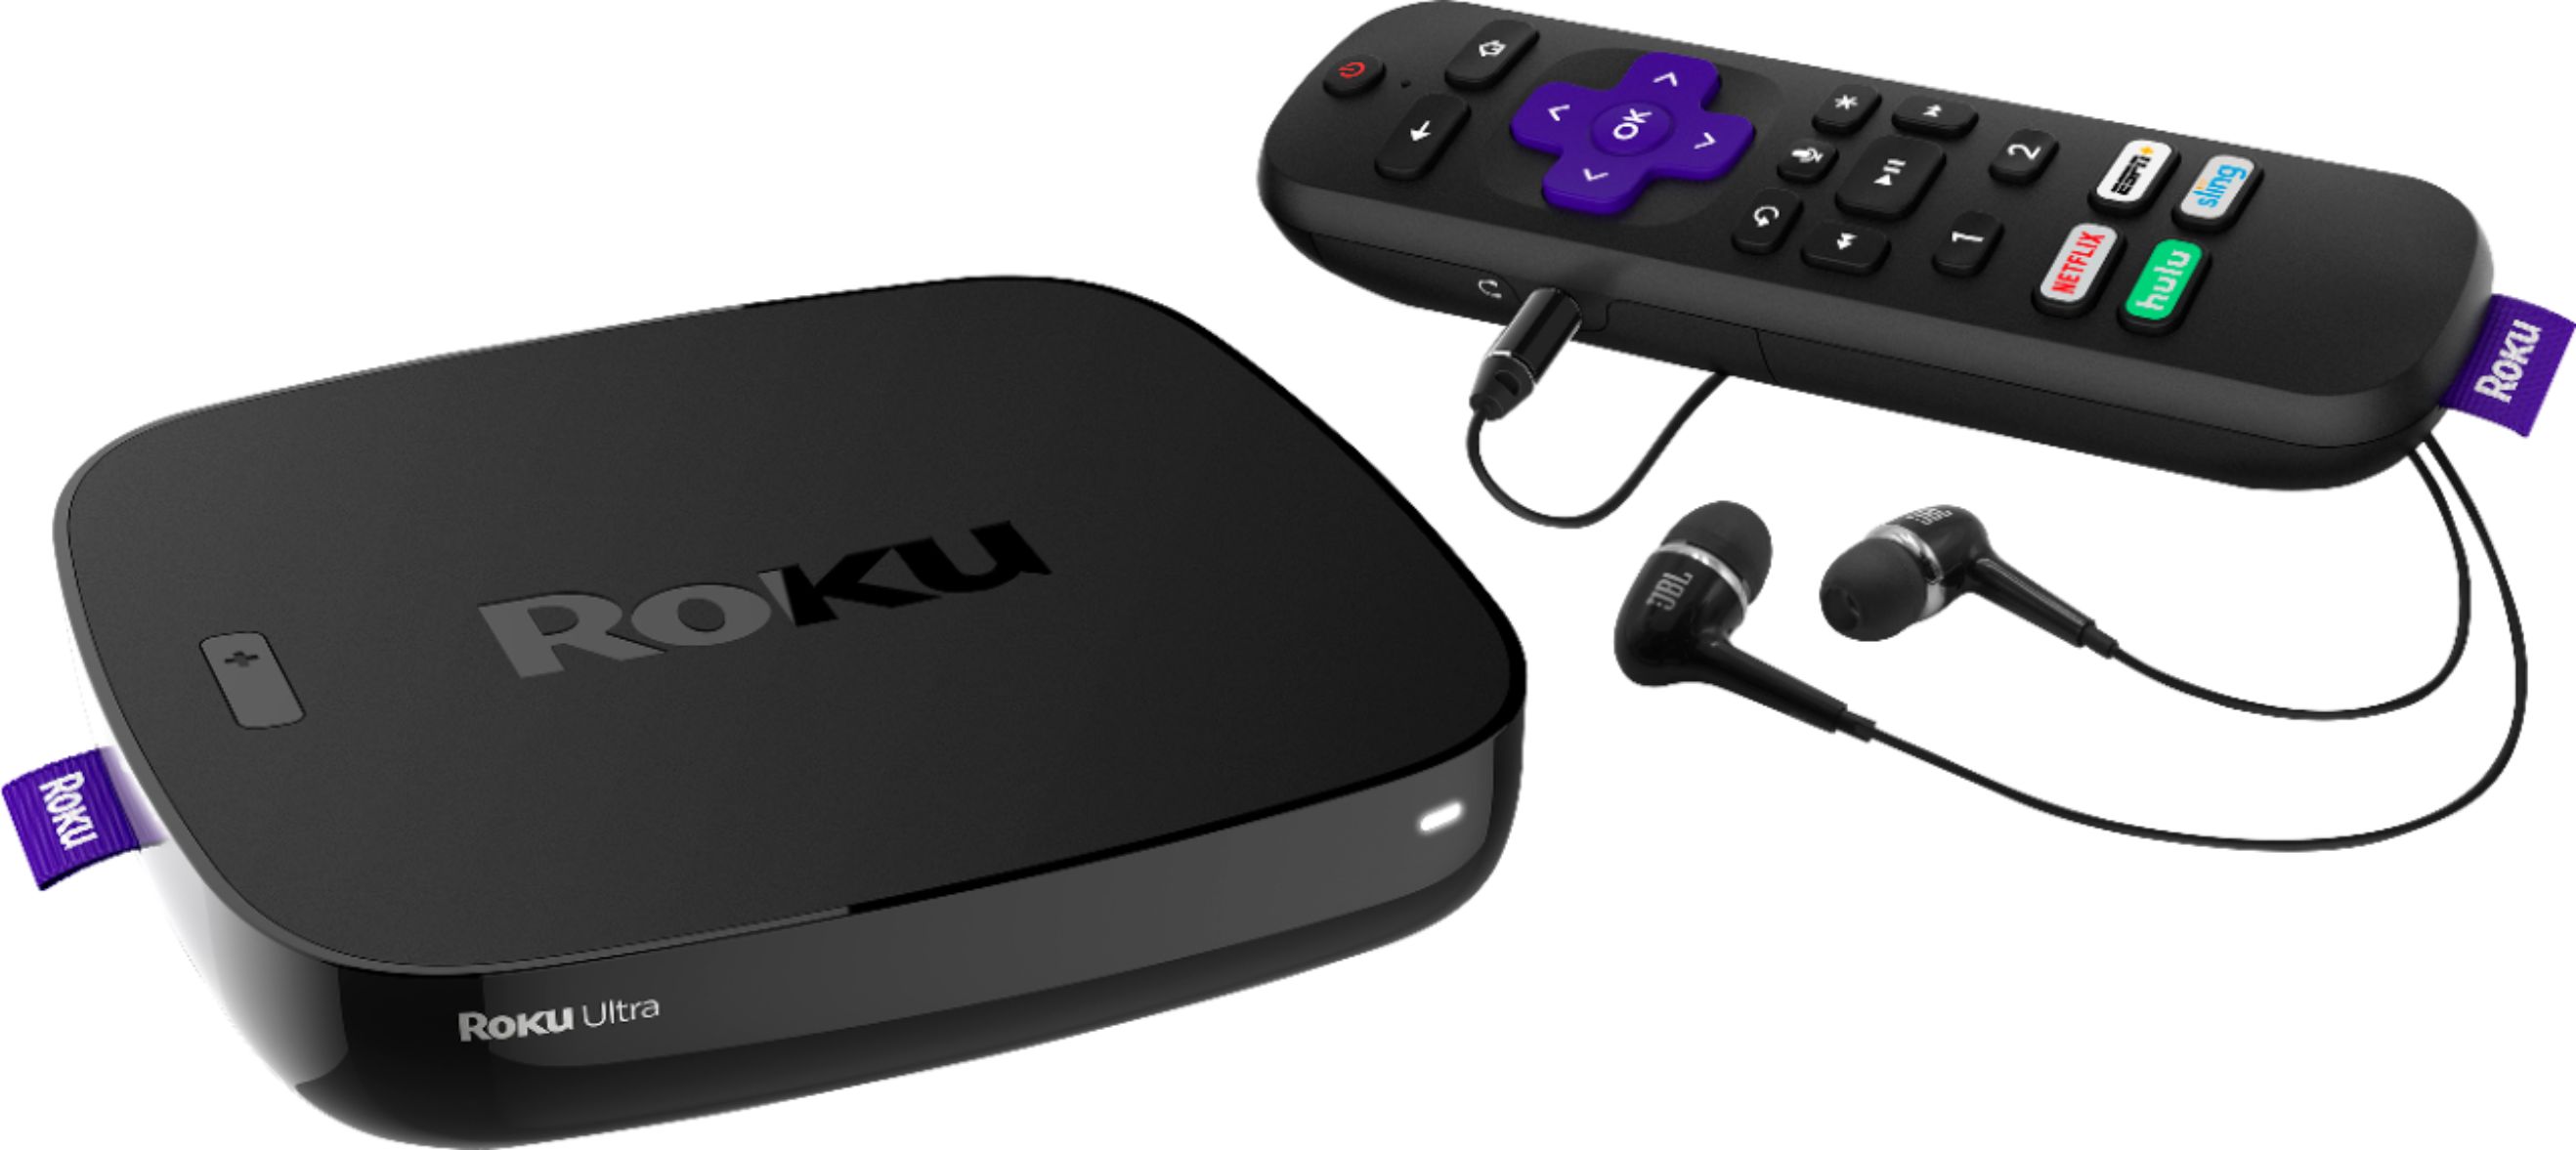 2018 Roku Ultra HD/4K/HDR Streaming Media Player. Now Includes Premium JBL Headphones. 